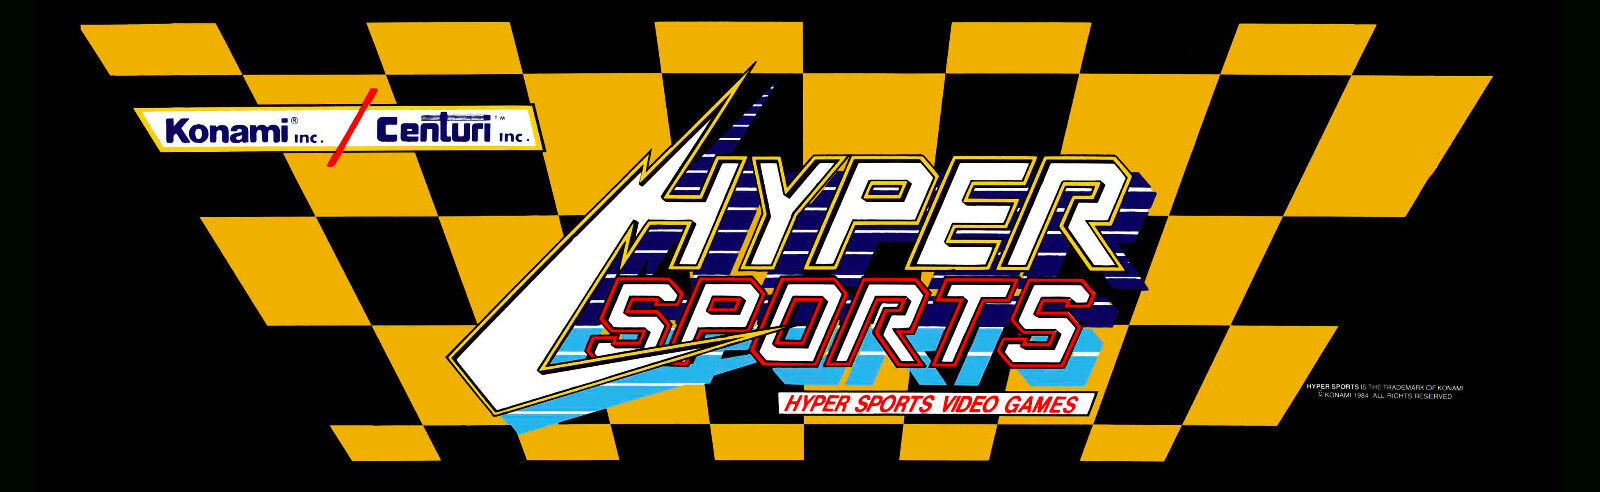 Hyper Sports Arcade Marquee 26